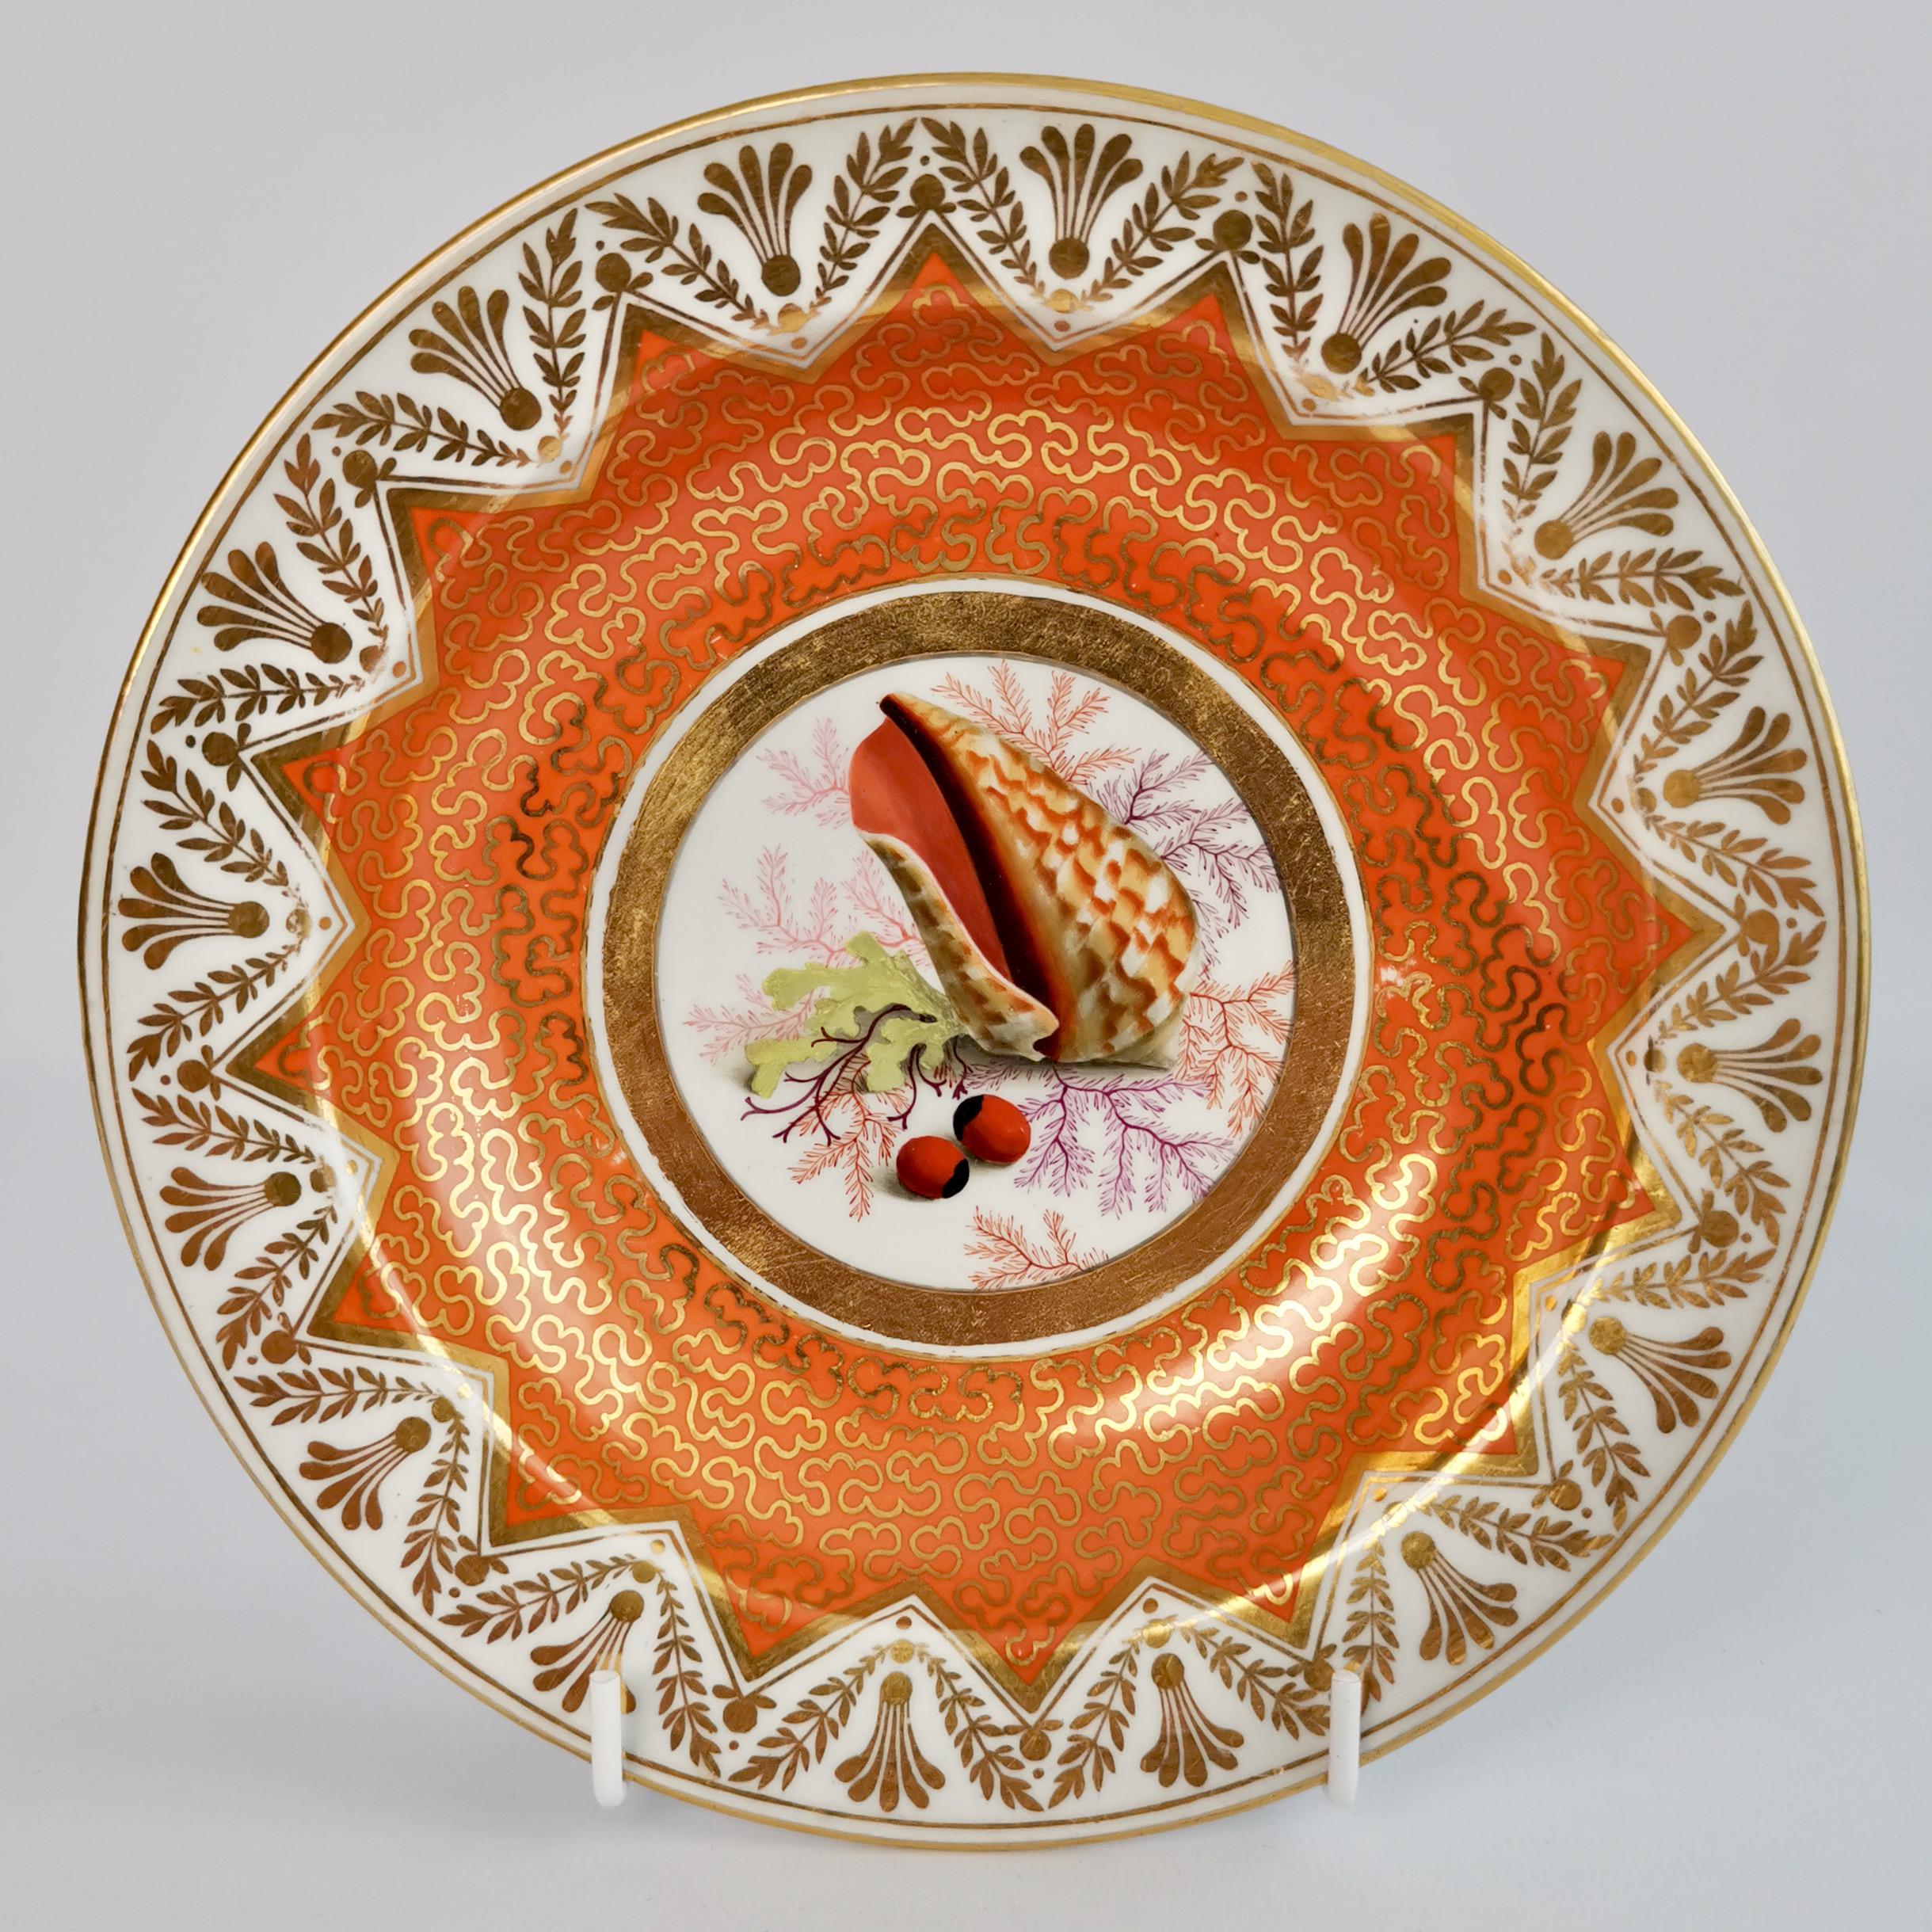 Chamberlains Worcester Porcelain Dessert Service, Orange, Regency, circa 1815 8